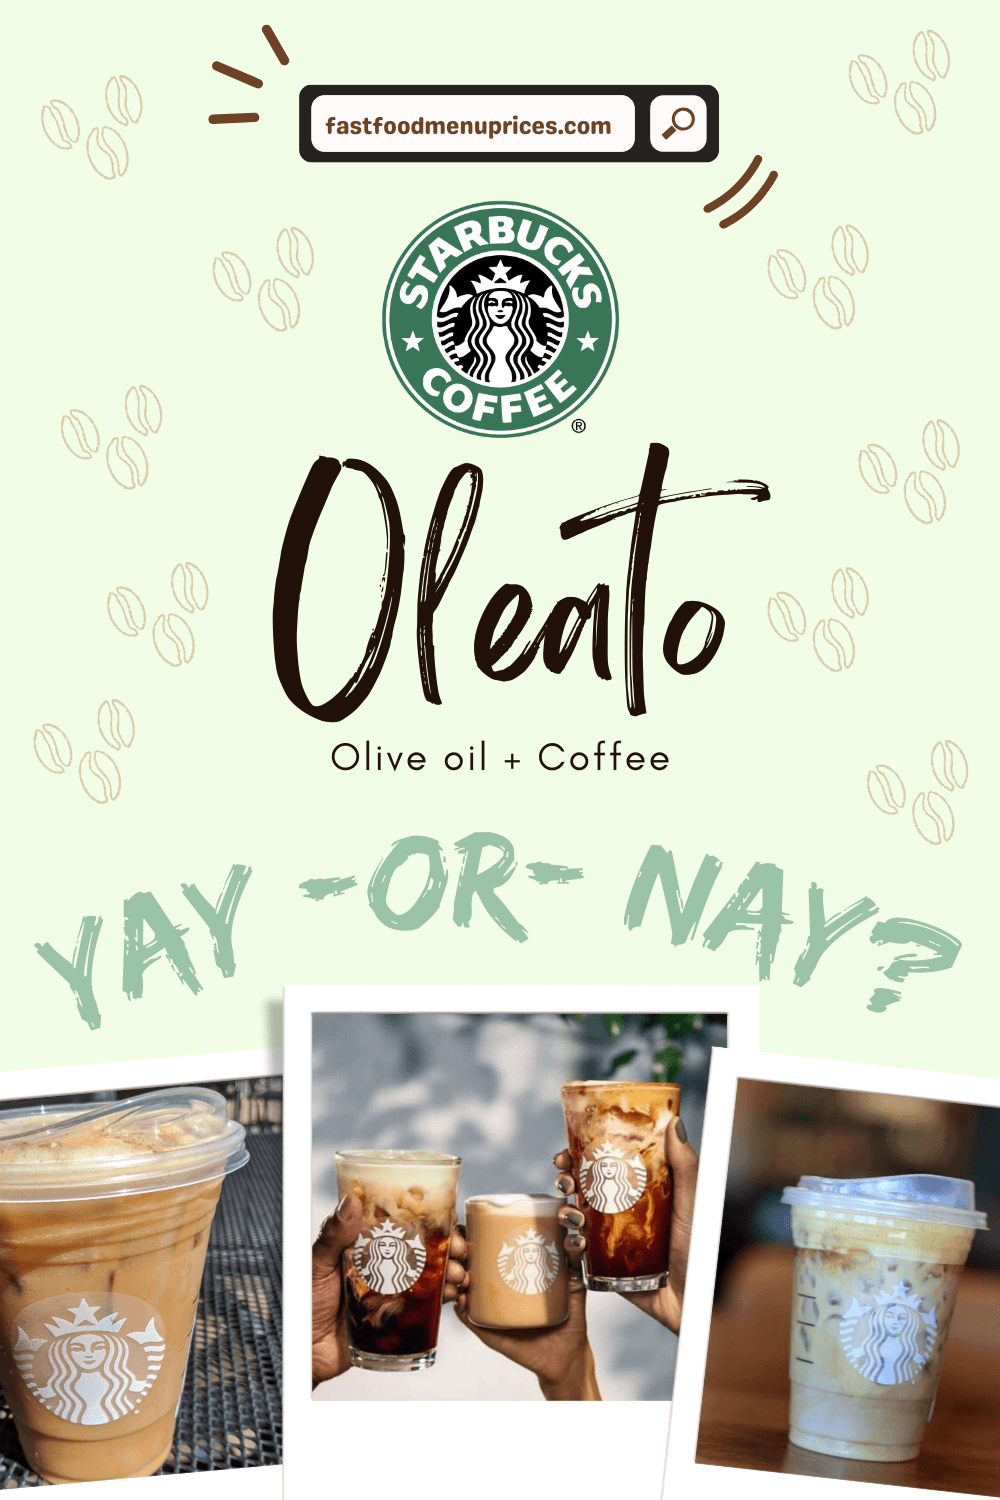 Starbucks oleato secret menu, yay or nay?